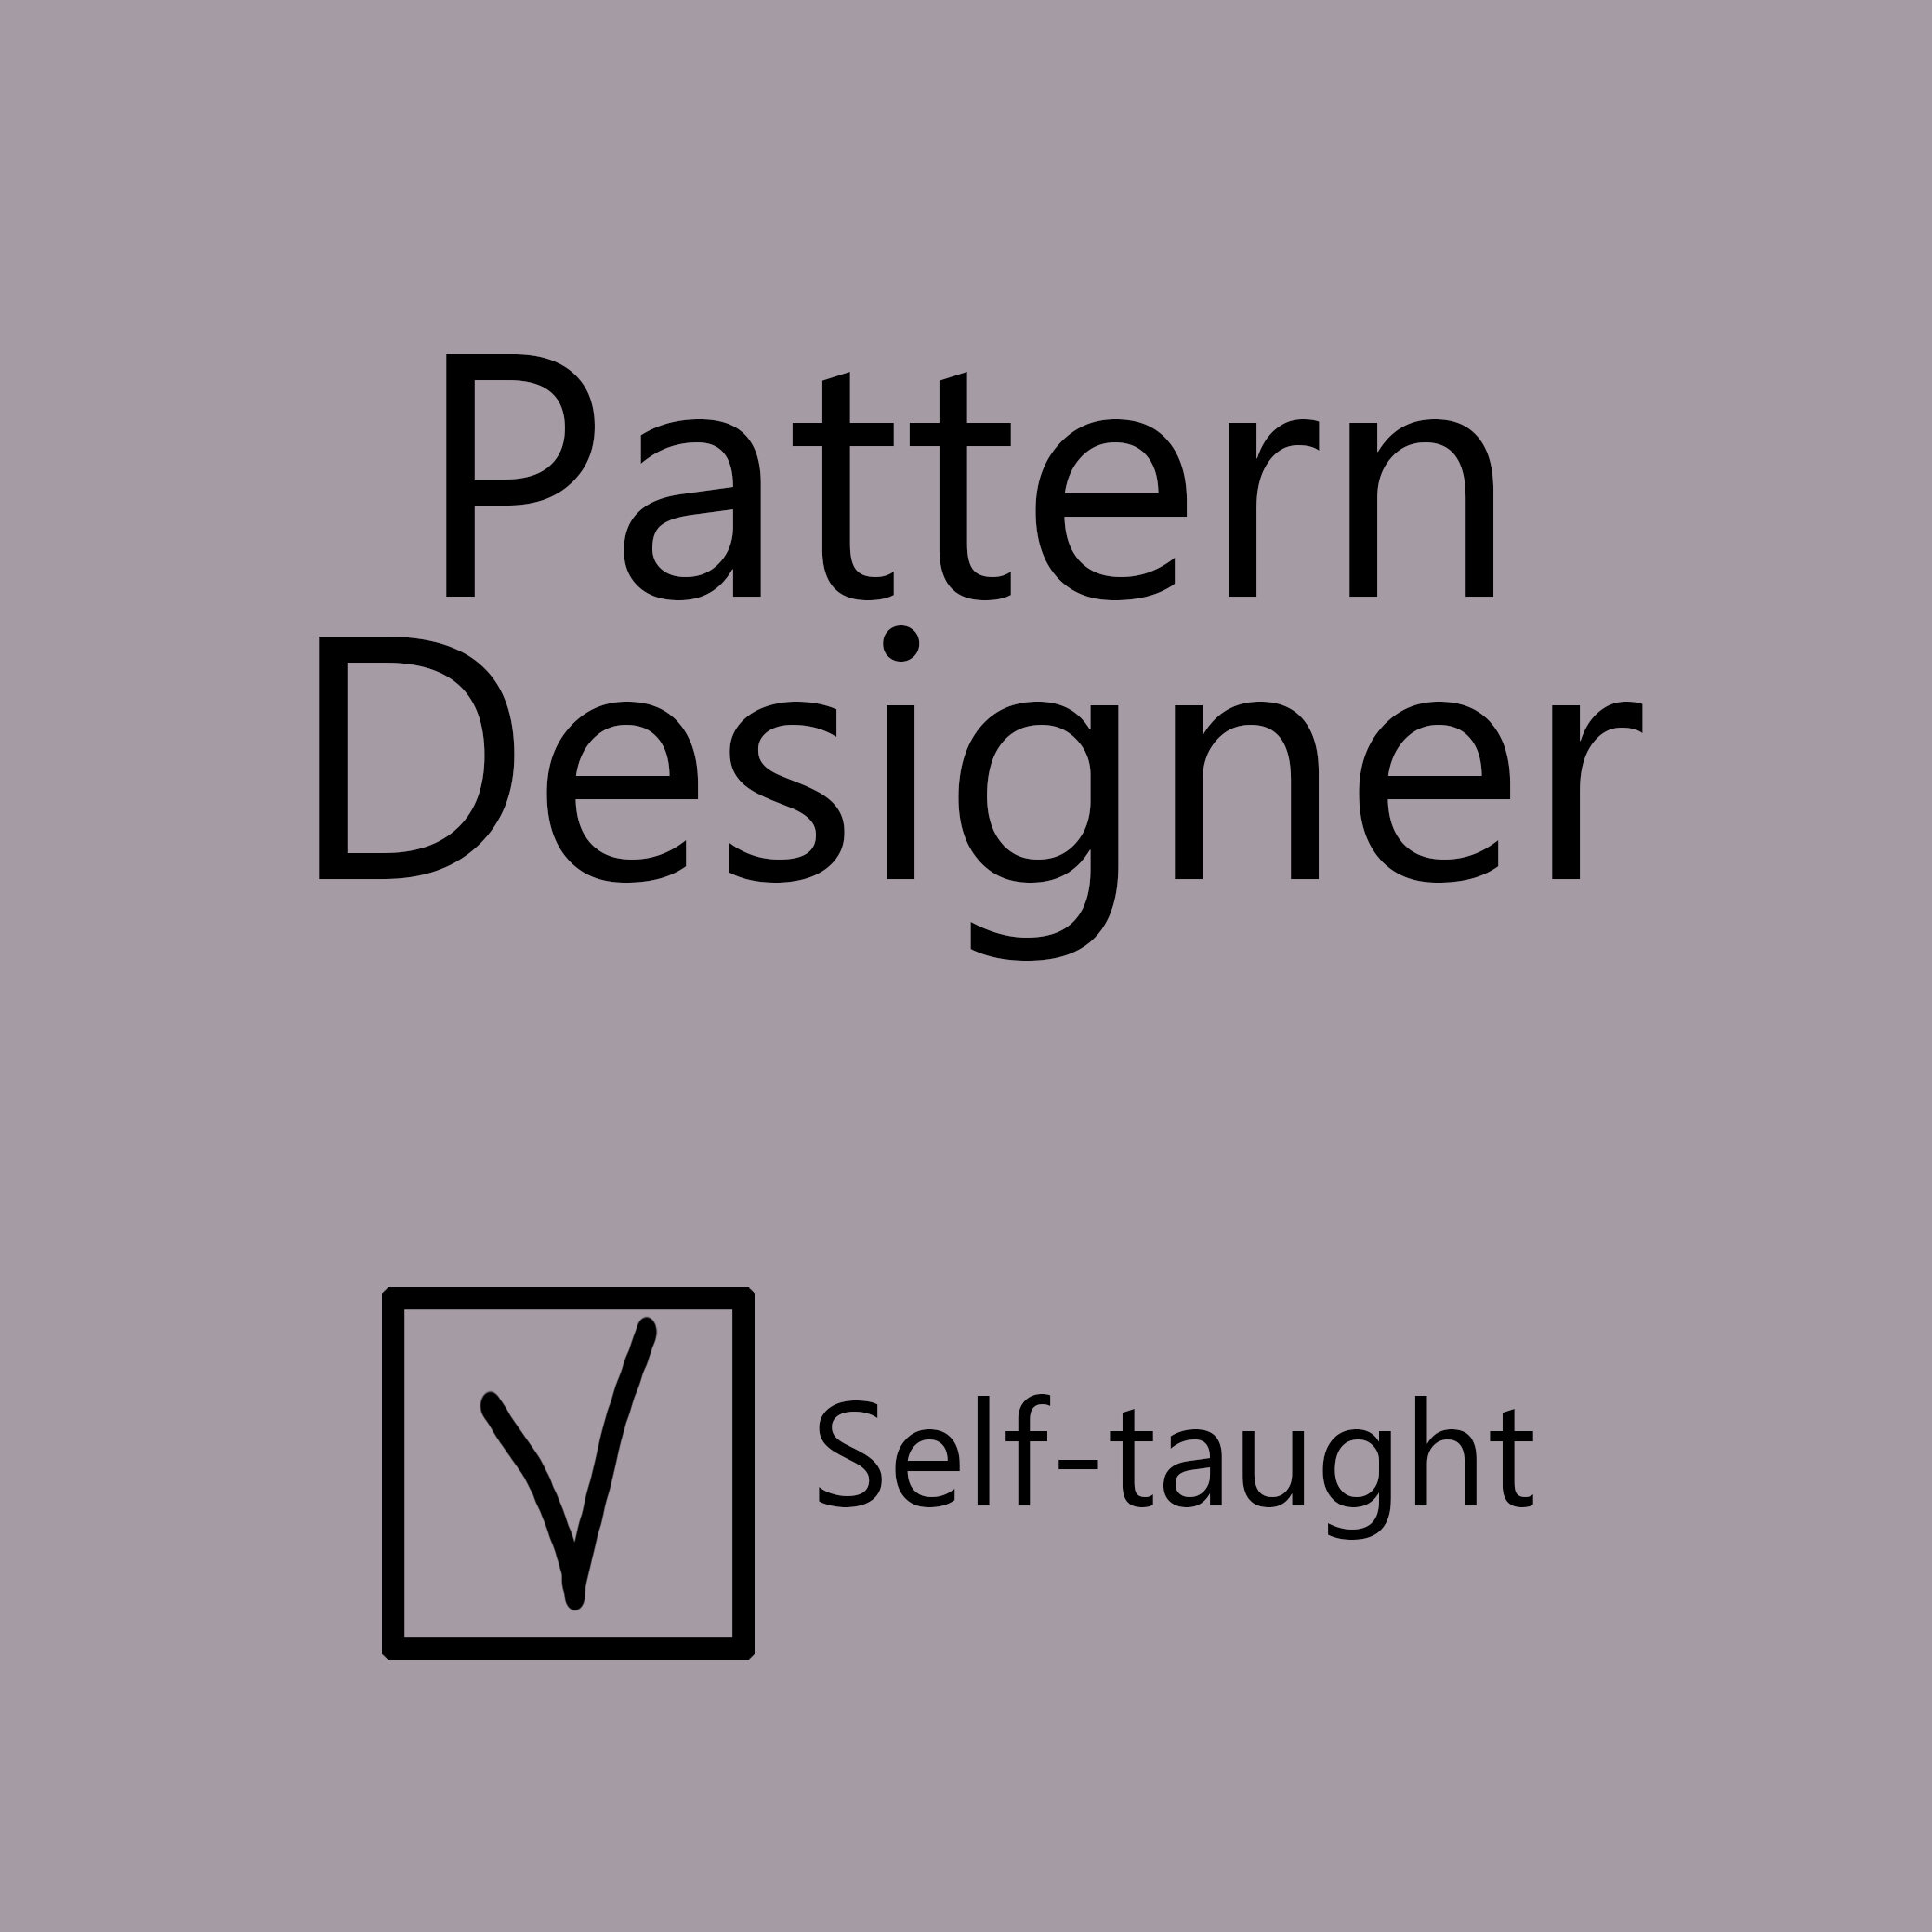 Pattern Designer.jpg